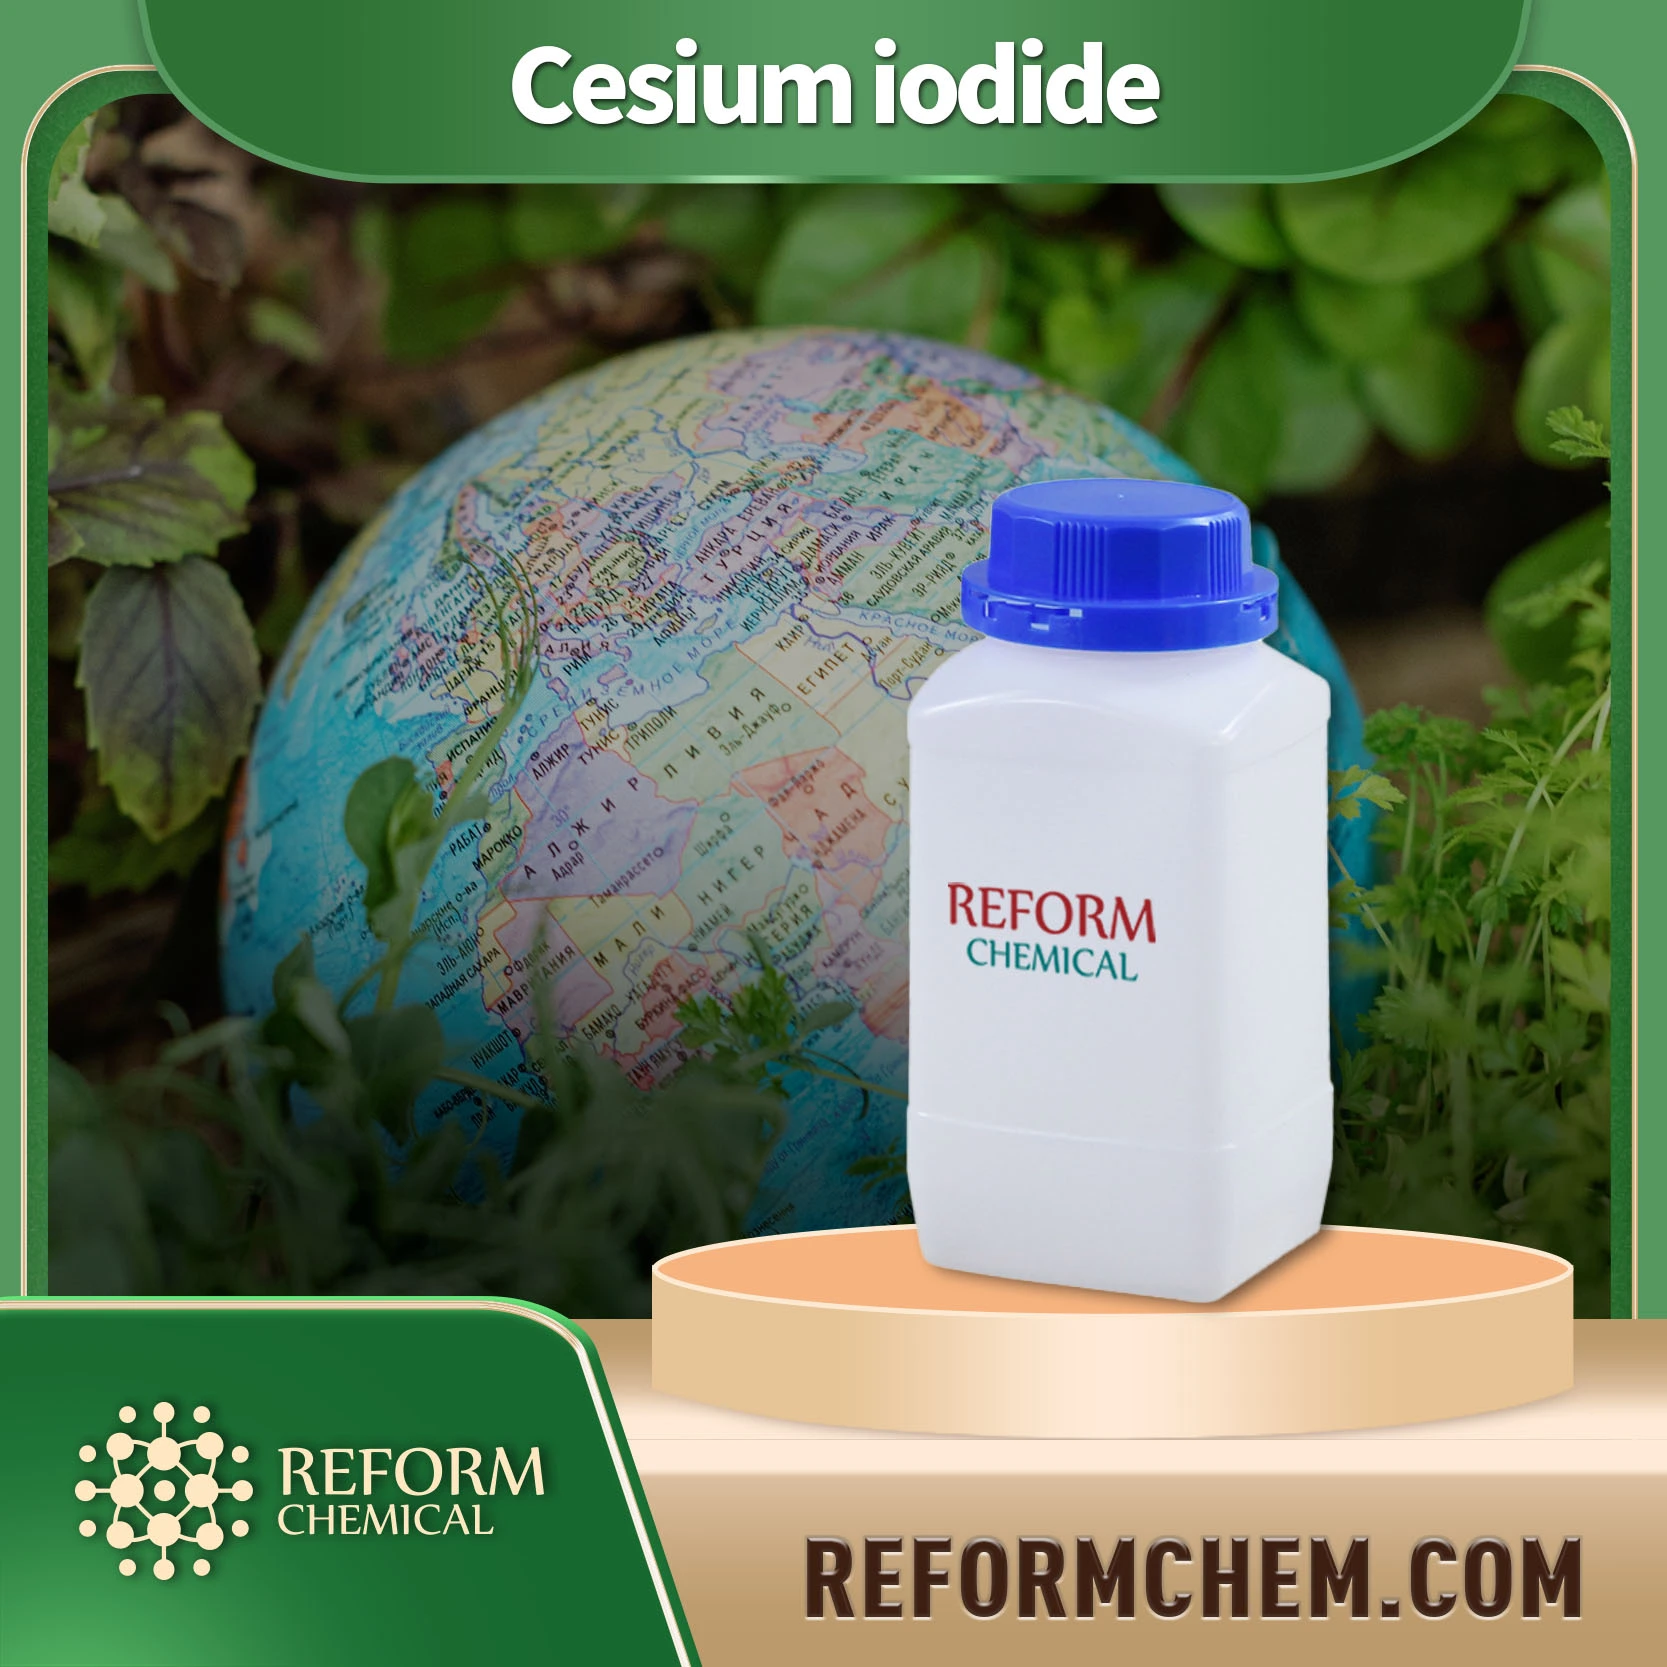 Cesium iodide